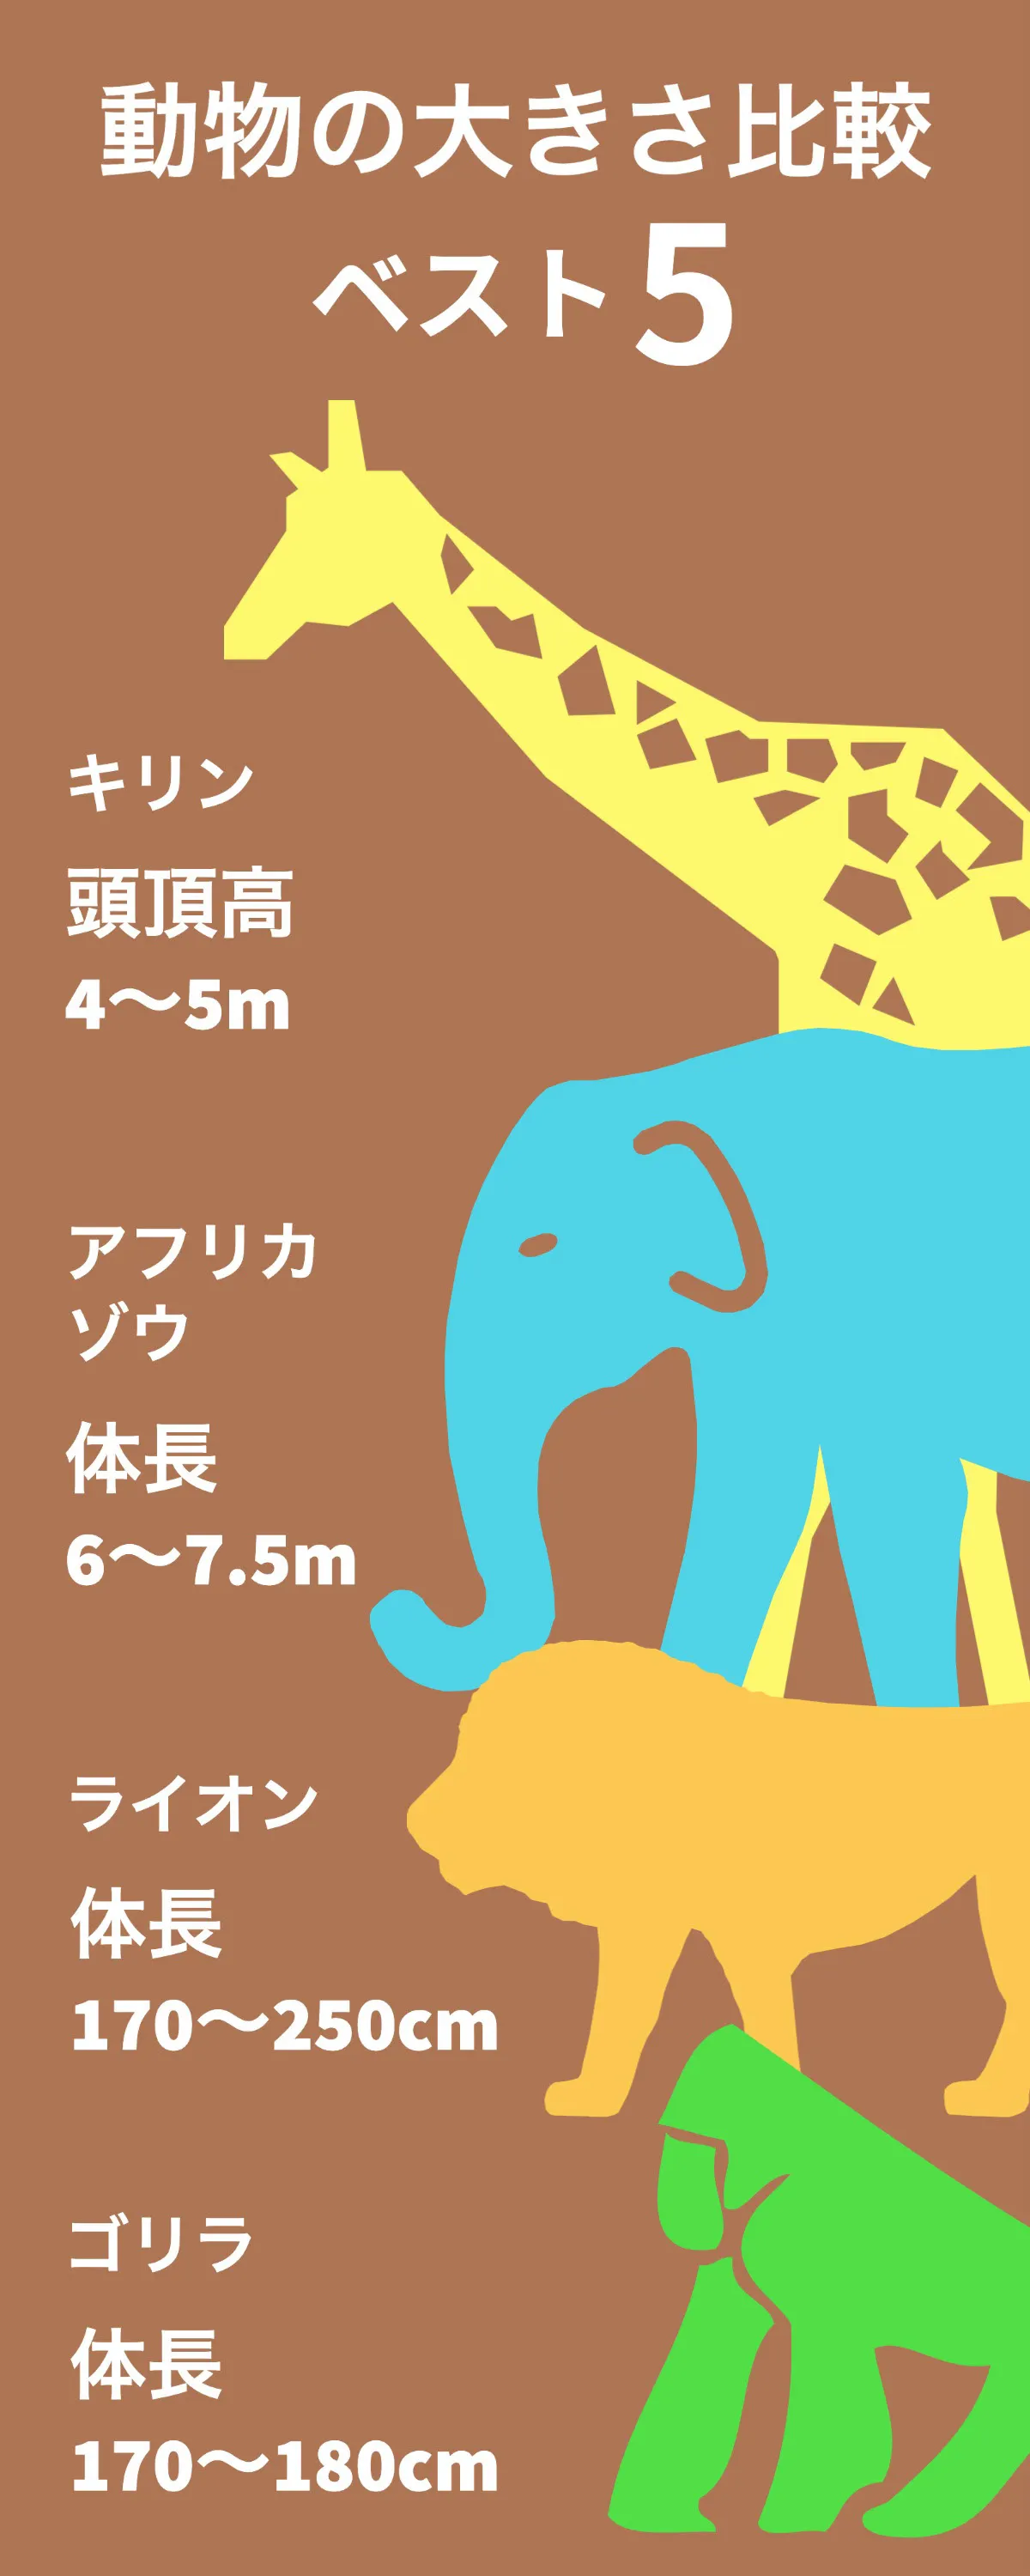 Animal size ranking infographic